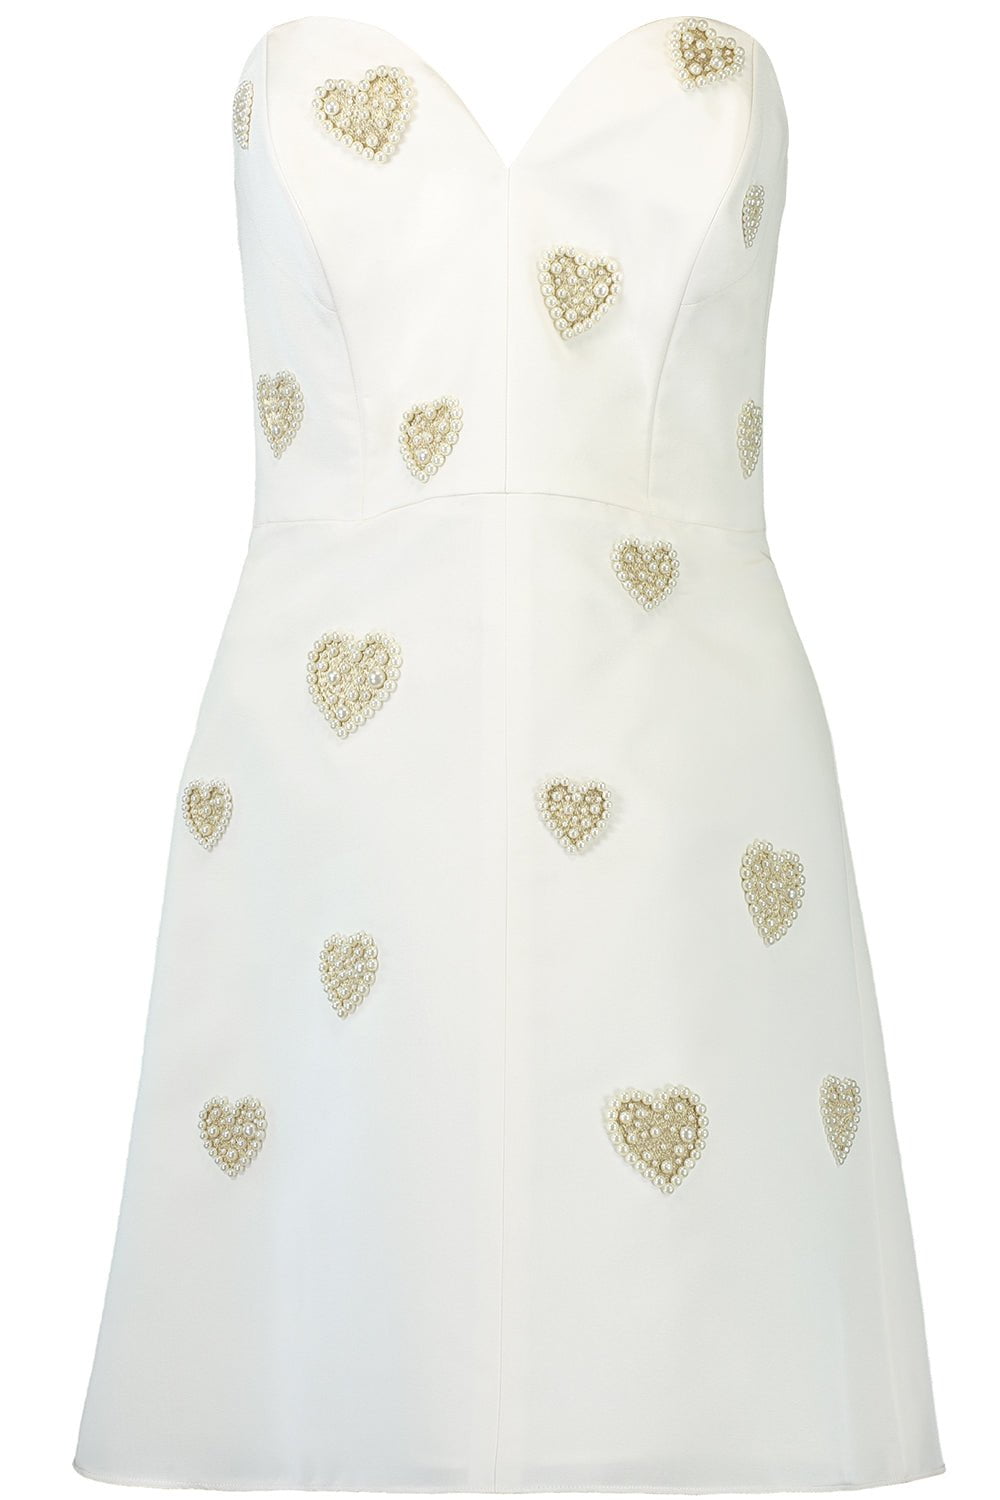 CAROLINA HERRERA-Embroidered Mini Dress-WHITE